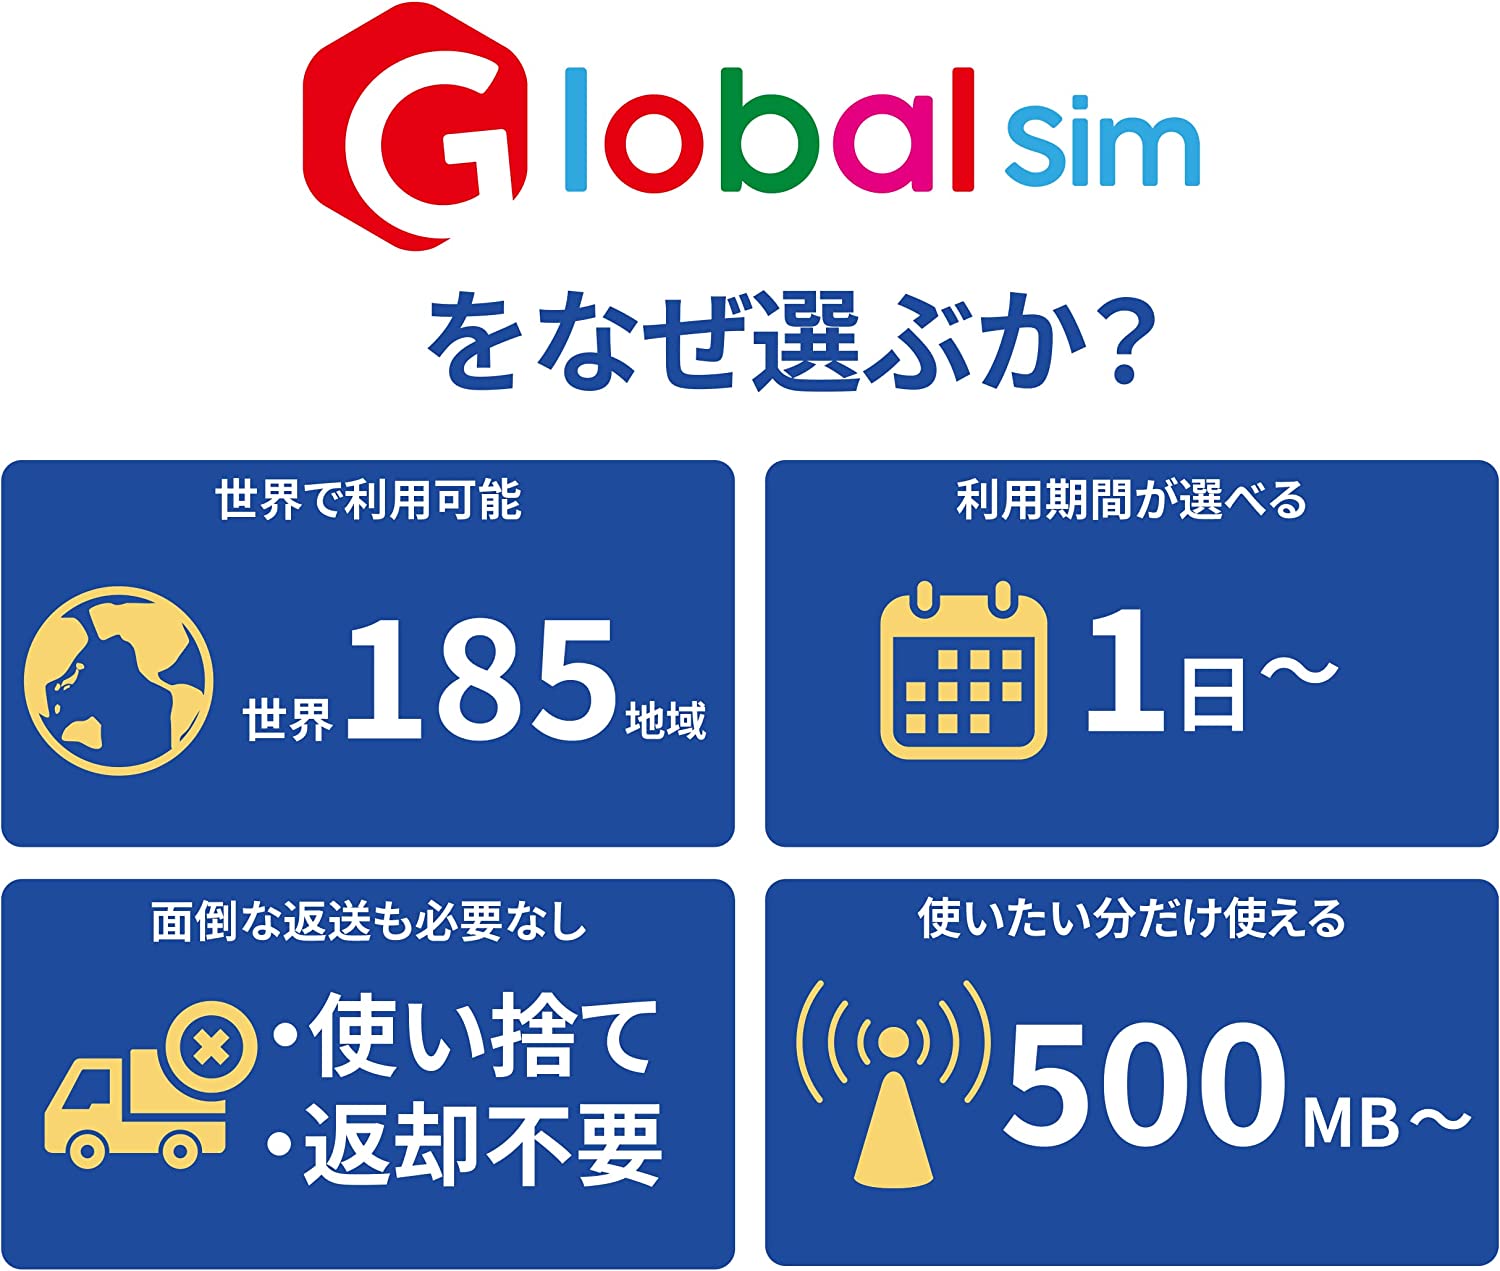 GLOBAL SIM シンガポール マレーシア タイ 7日間 データ無制限 (500MB 日高速）（容量を使い切っても利用期間内は最大384kbps） データ通信専用 シムフリー端末のみ対応 追加費用なし・契約不要